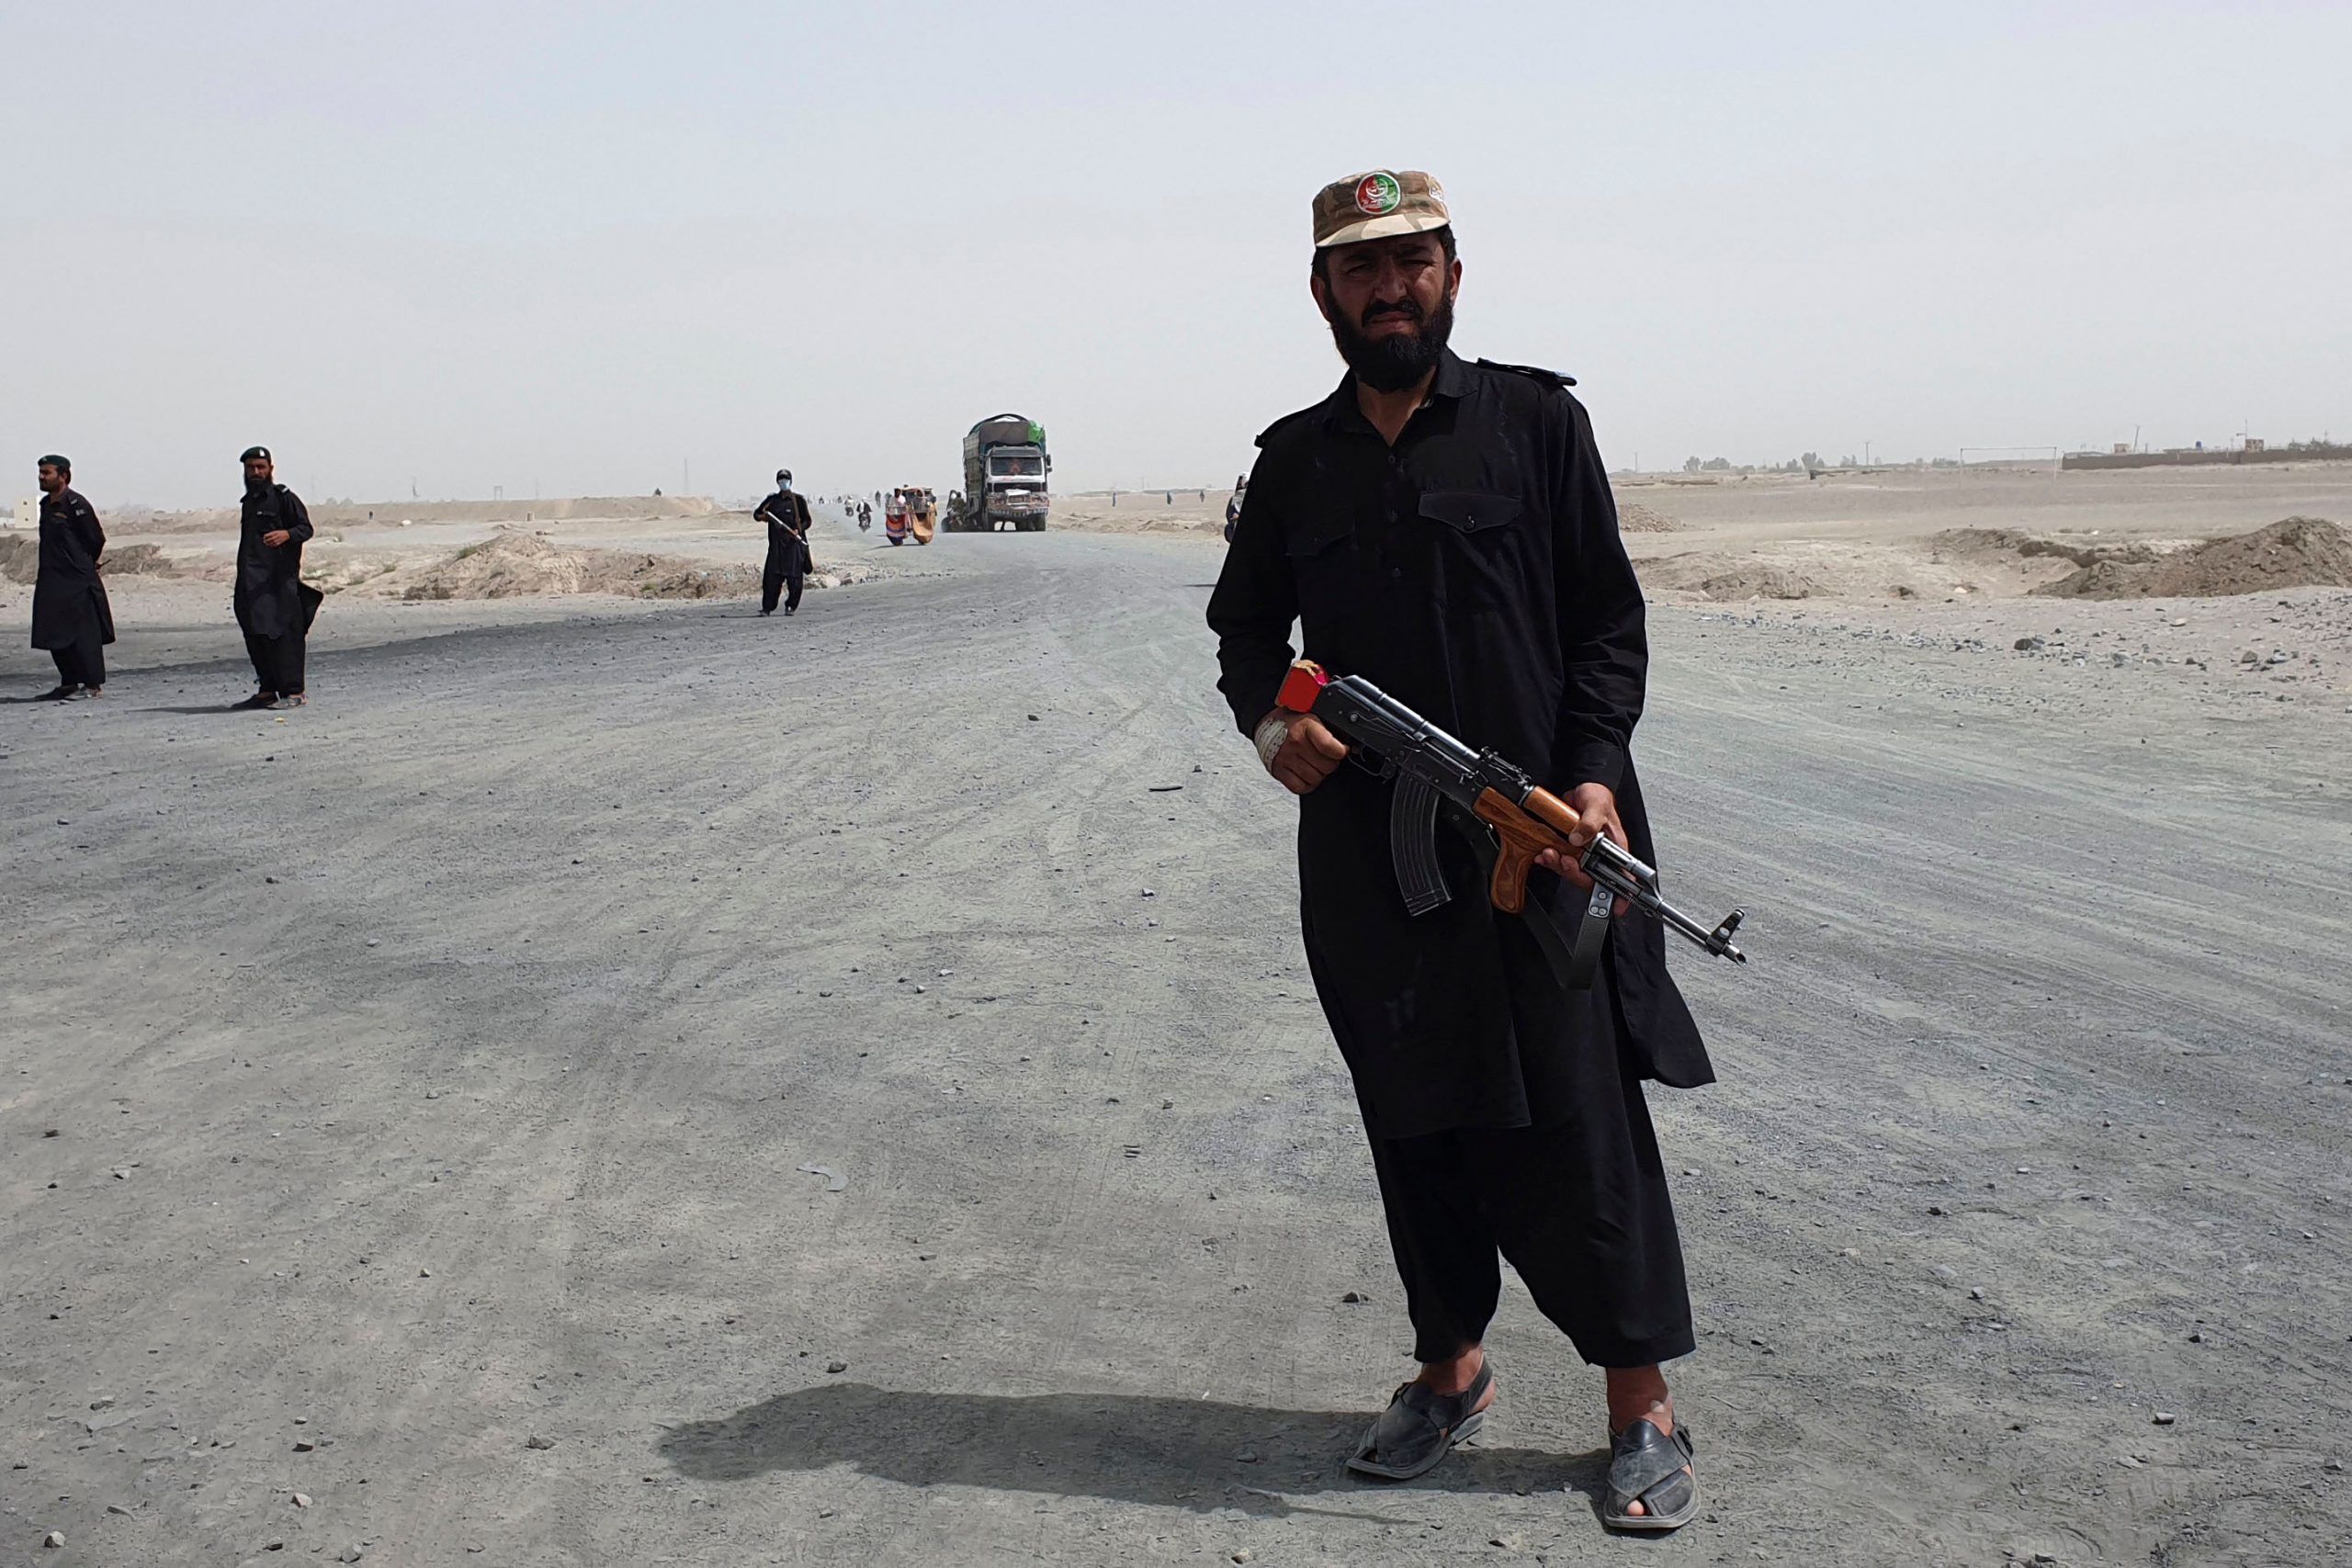 Kabul, Taliban negotiators to meet in Qatar as Afghan fighting rages